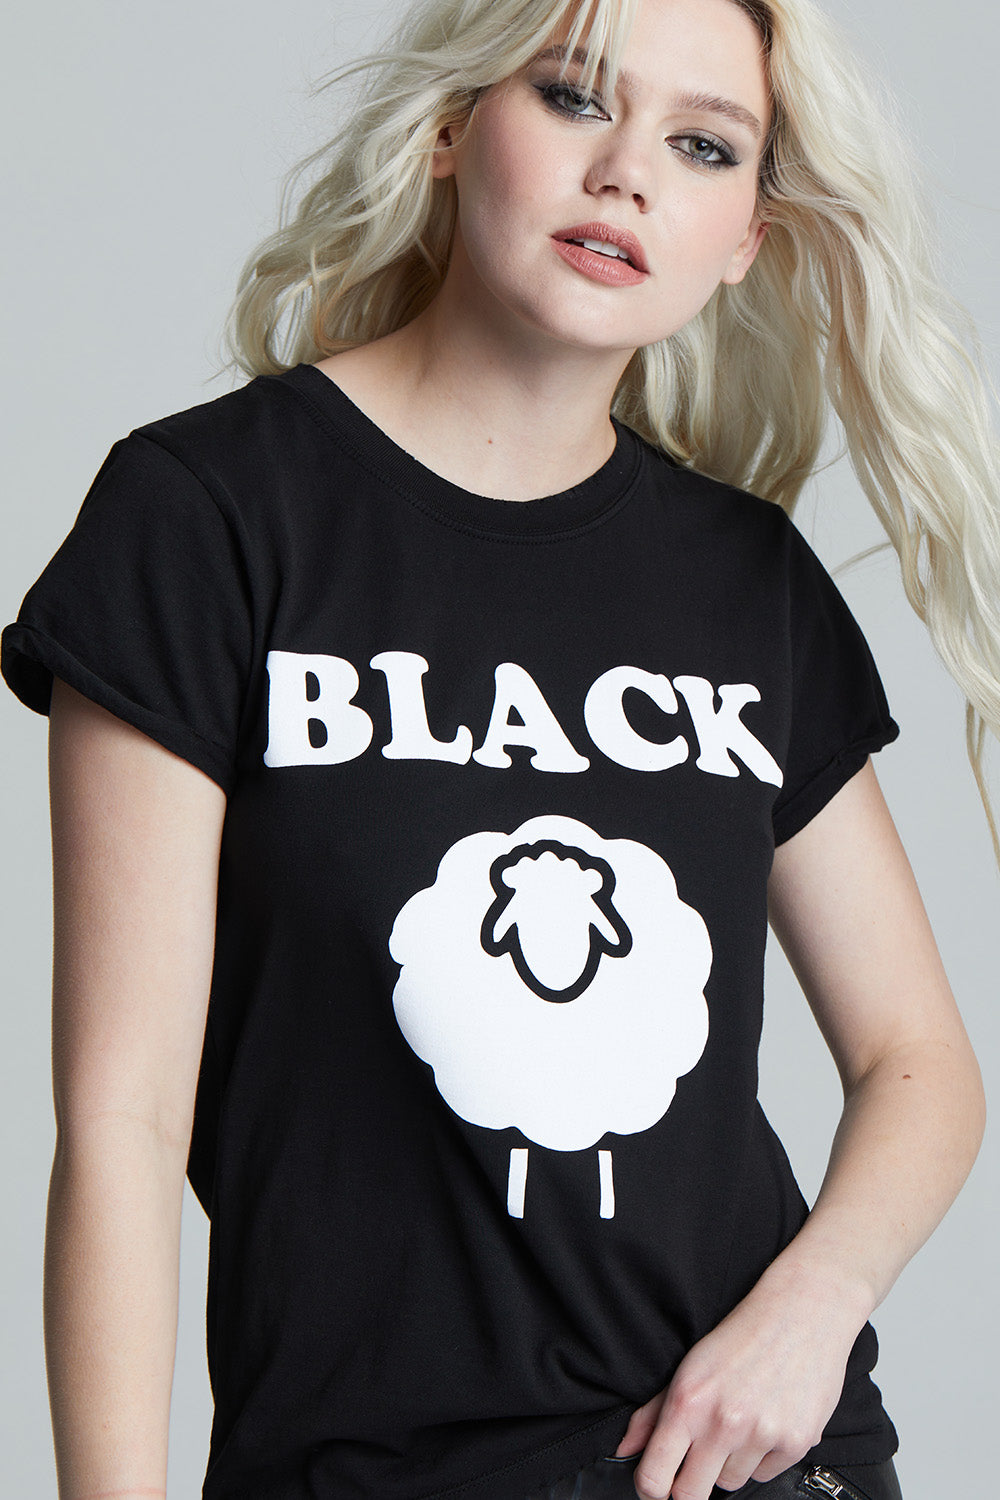 Black Black Sheep Tee